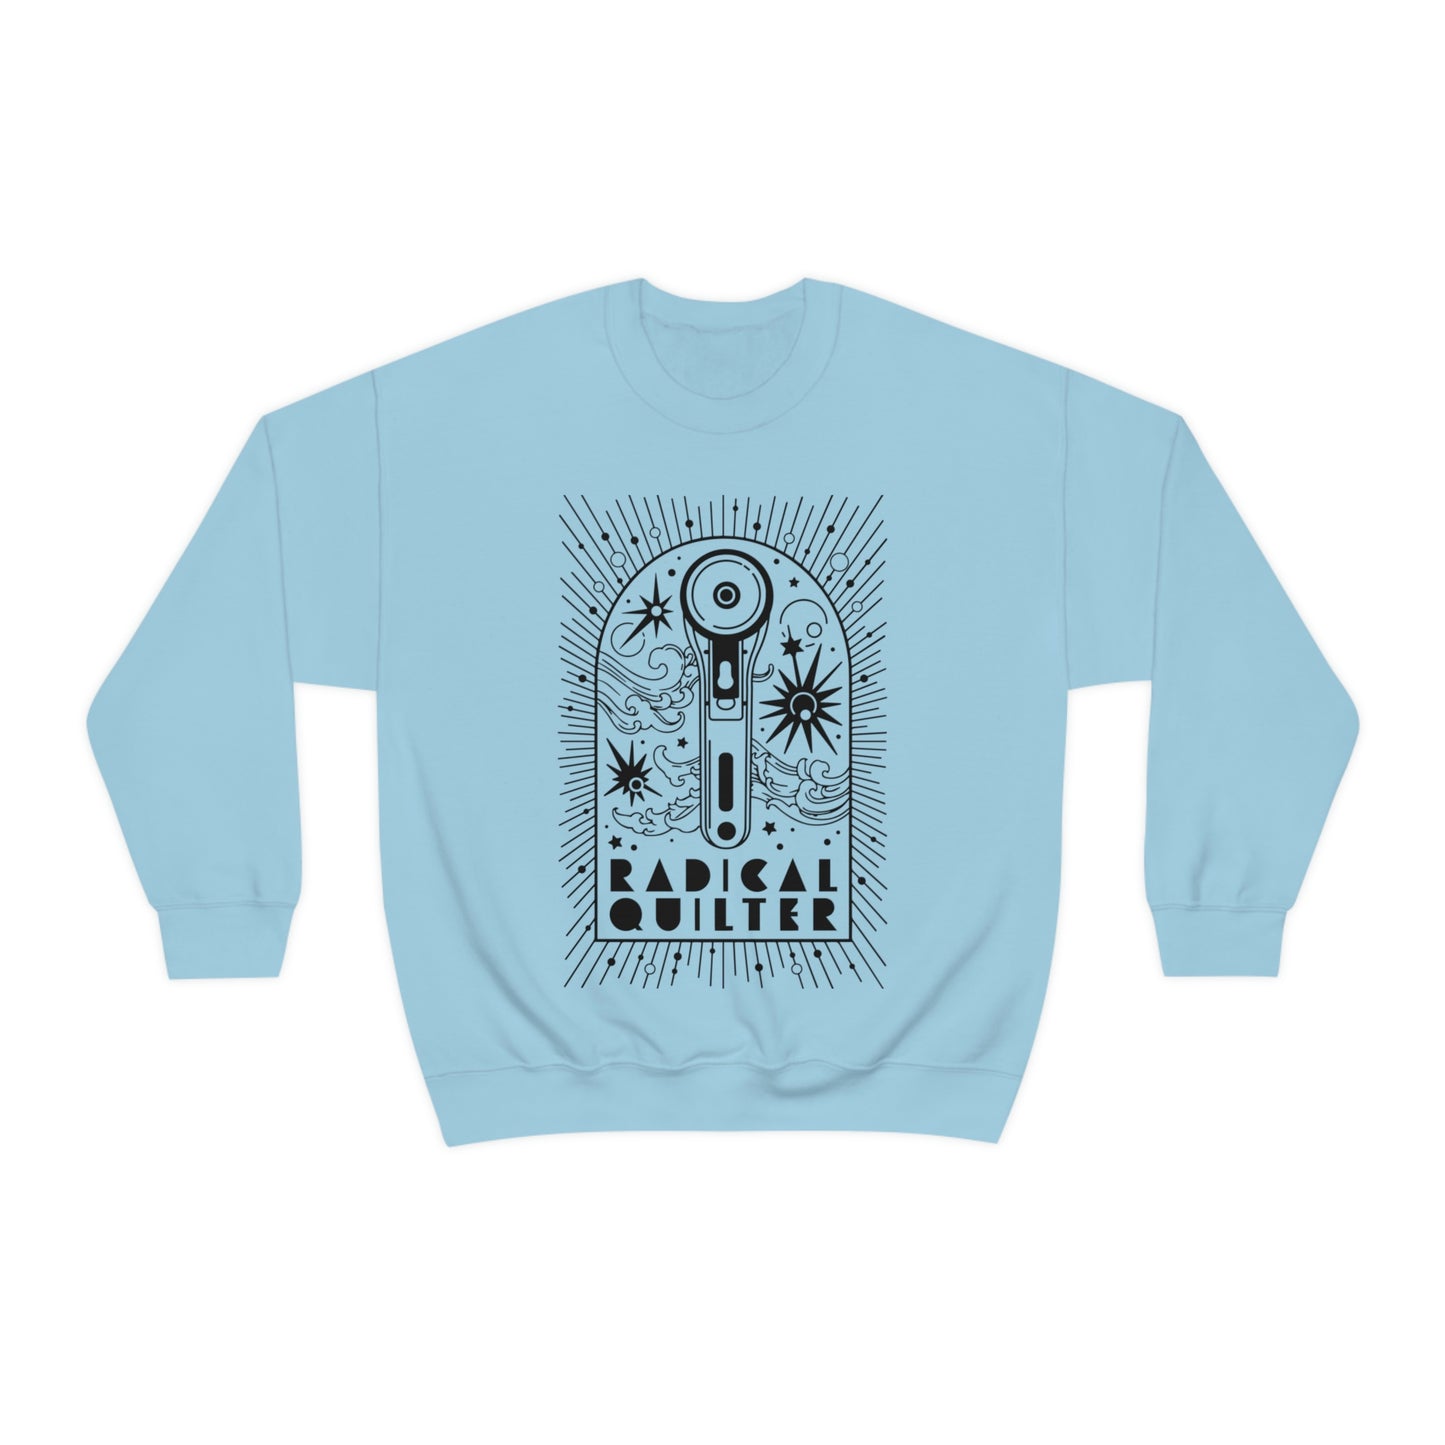 Radical Quilter Crewneck Sweatshirt (Black Design)